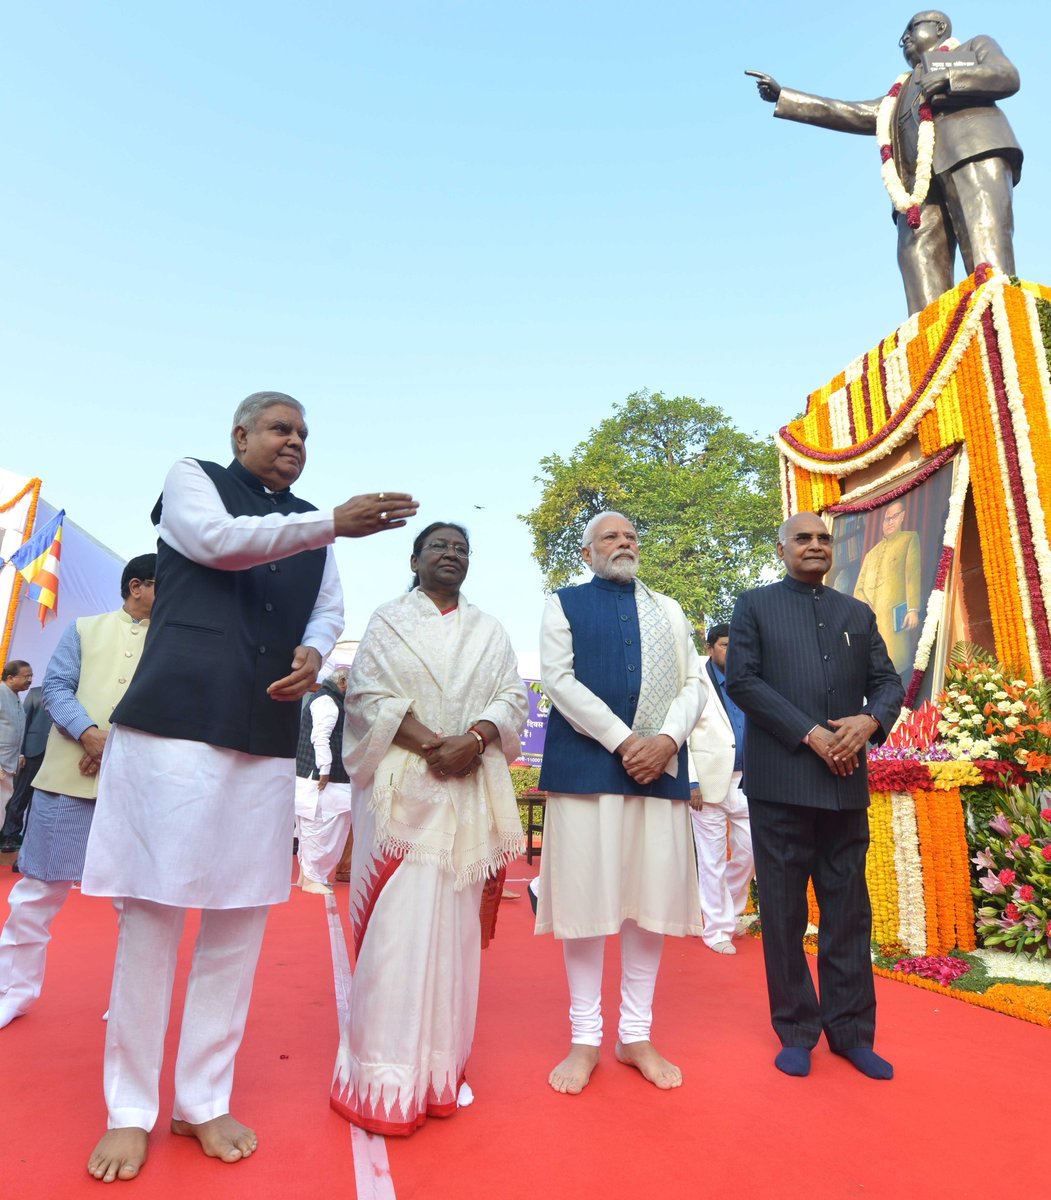 President Droupadi Murmu paid floral tributes to Babasaheb Dr B.R. Ambedkar on his Mahaparinirvan Diwas at Parliament House Lawns, New Delhi.